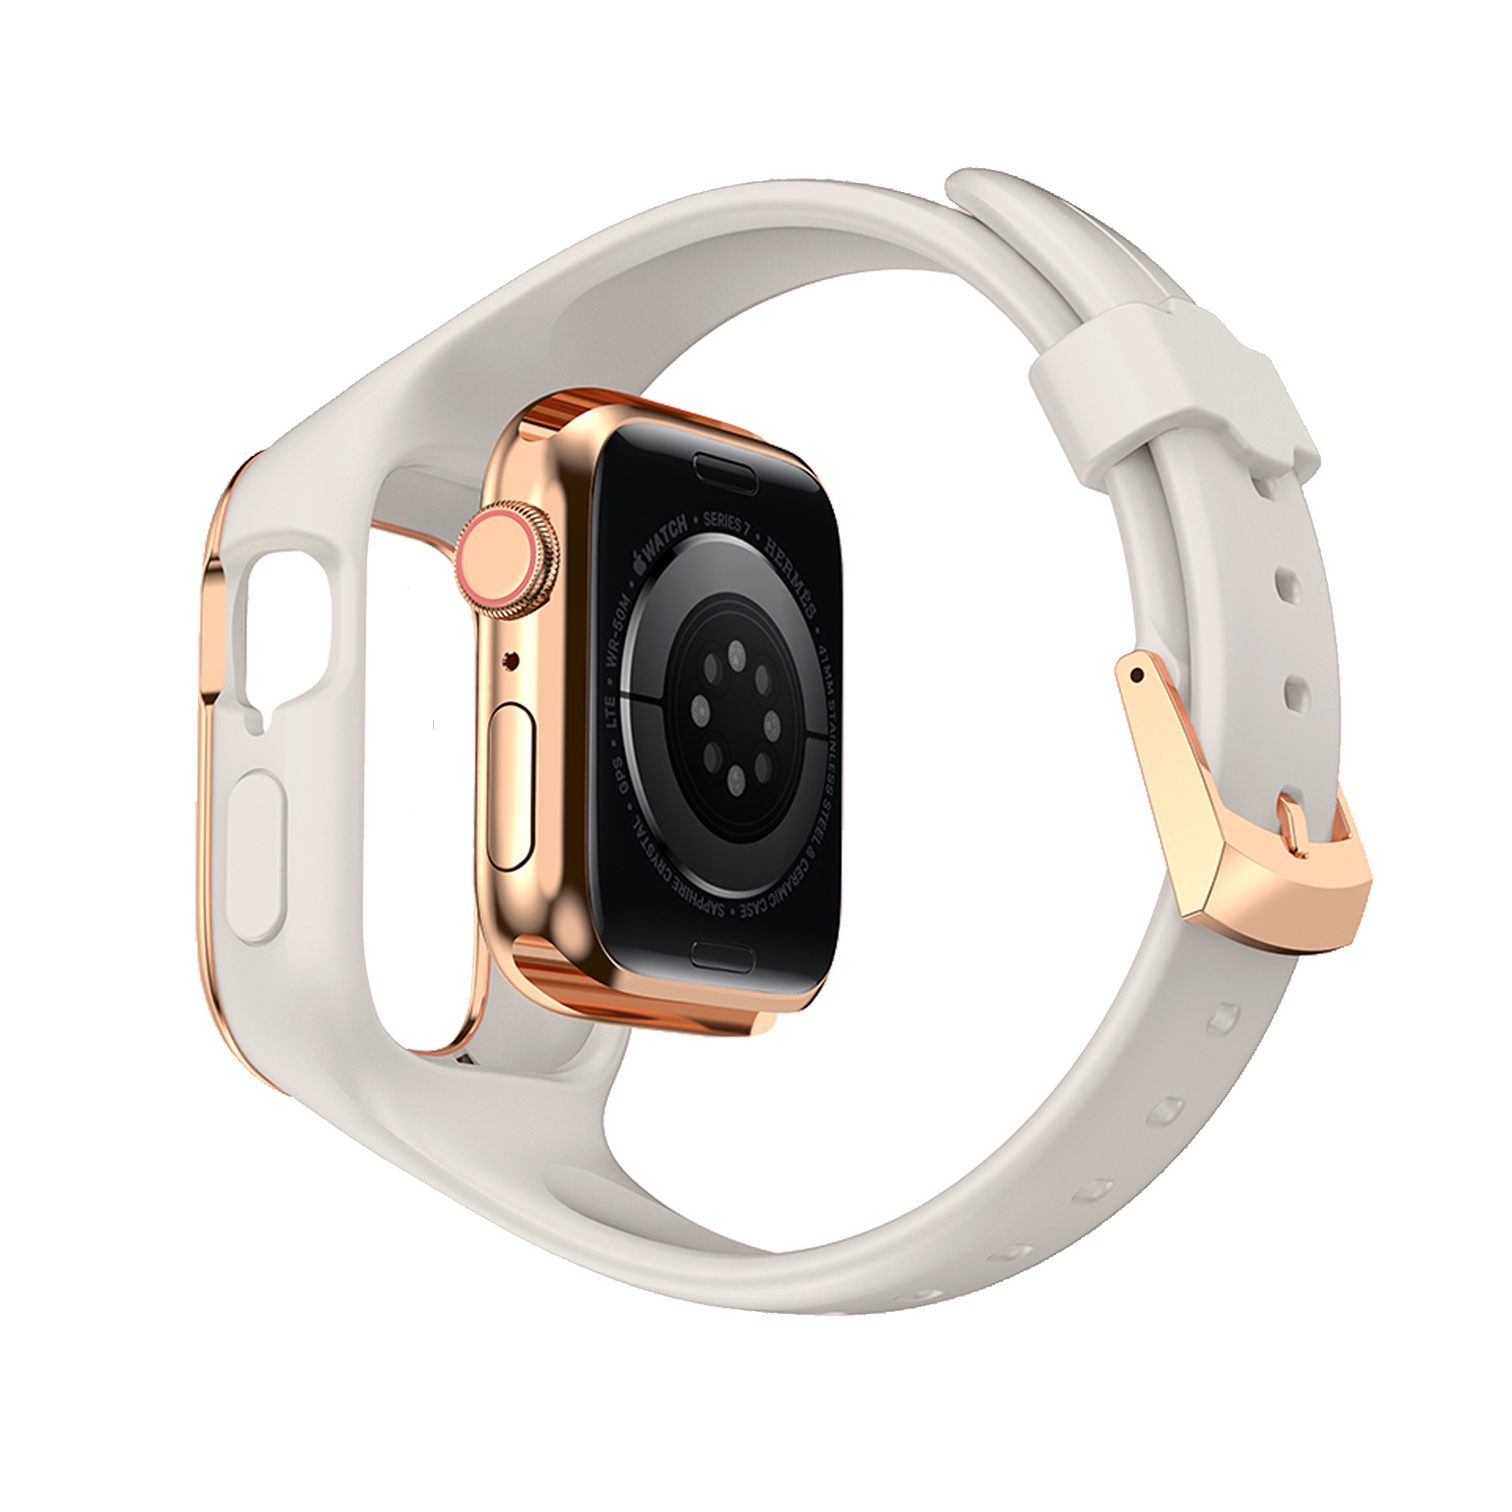 Apple Watch Case - Rio - Starlight Rose Gold